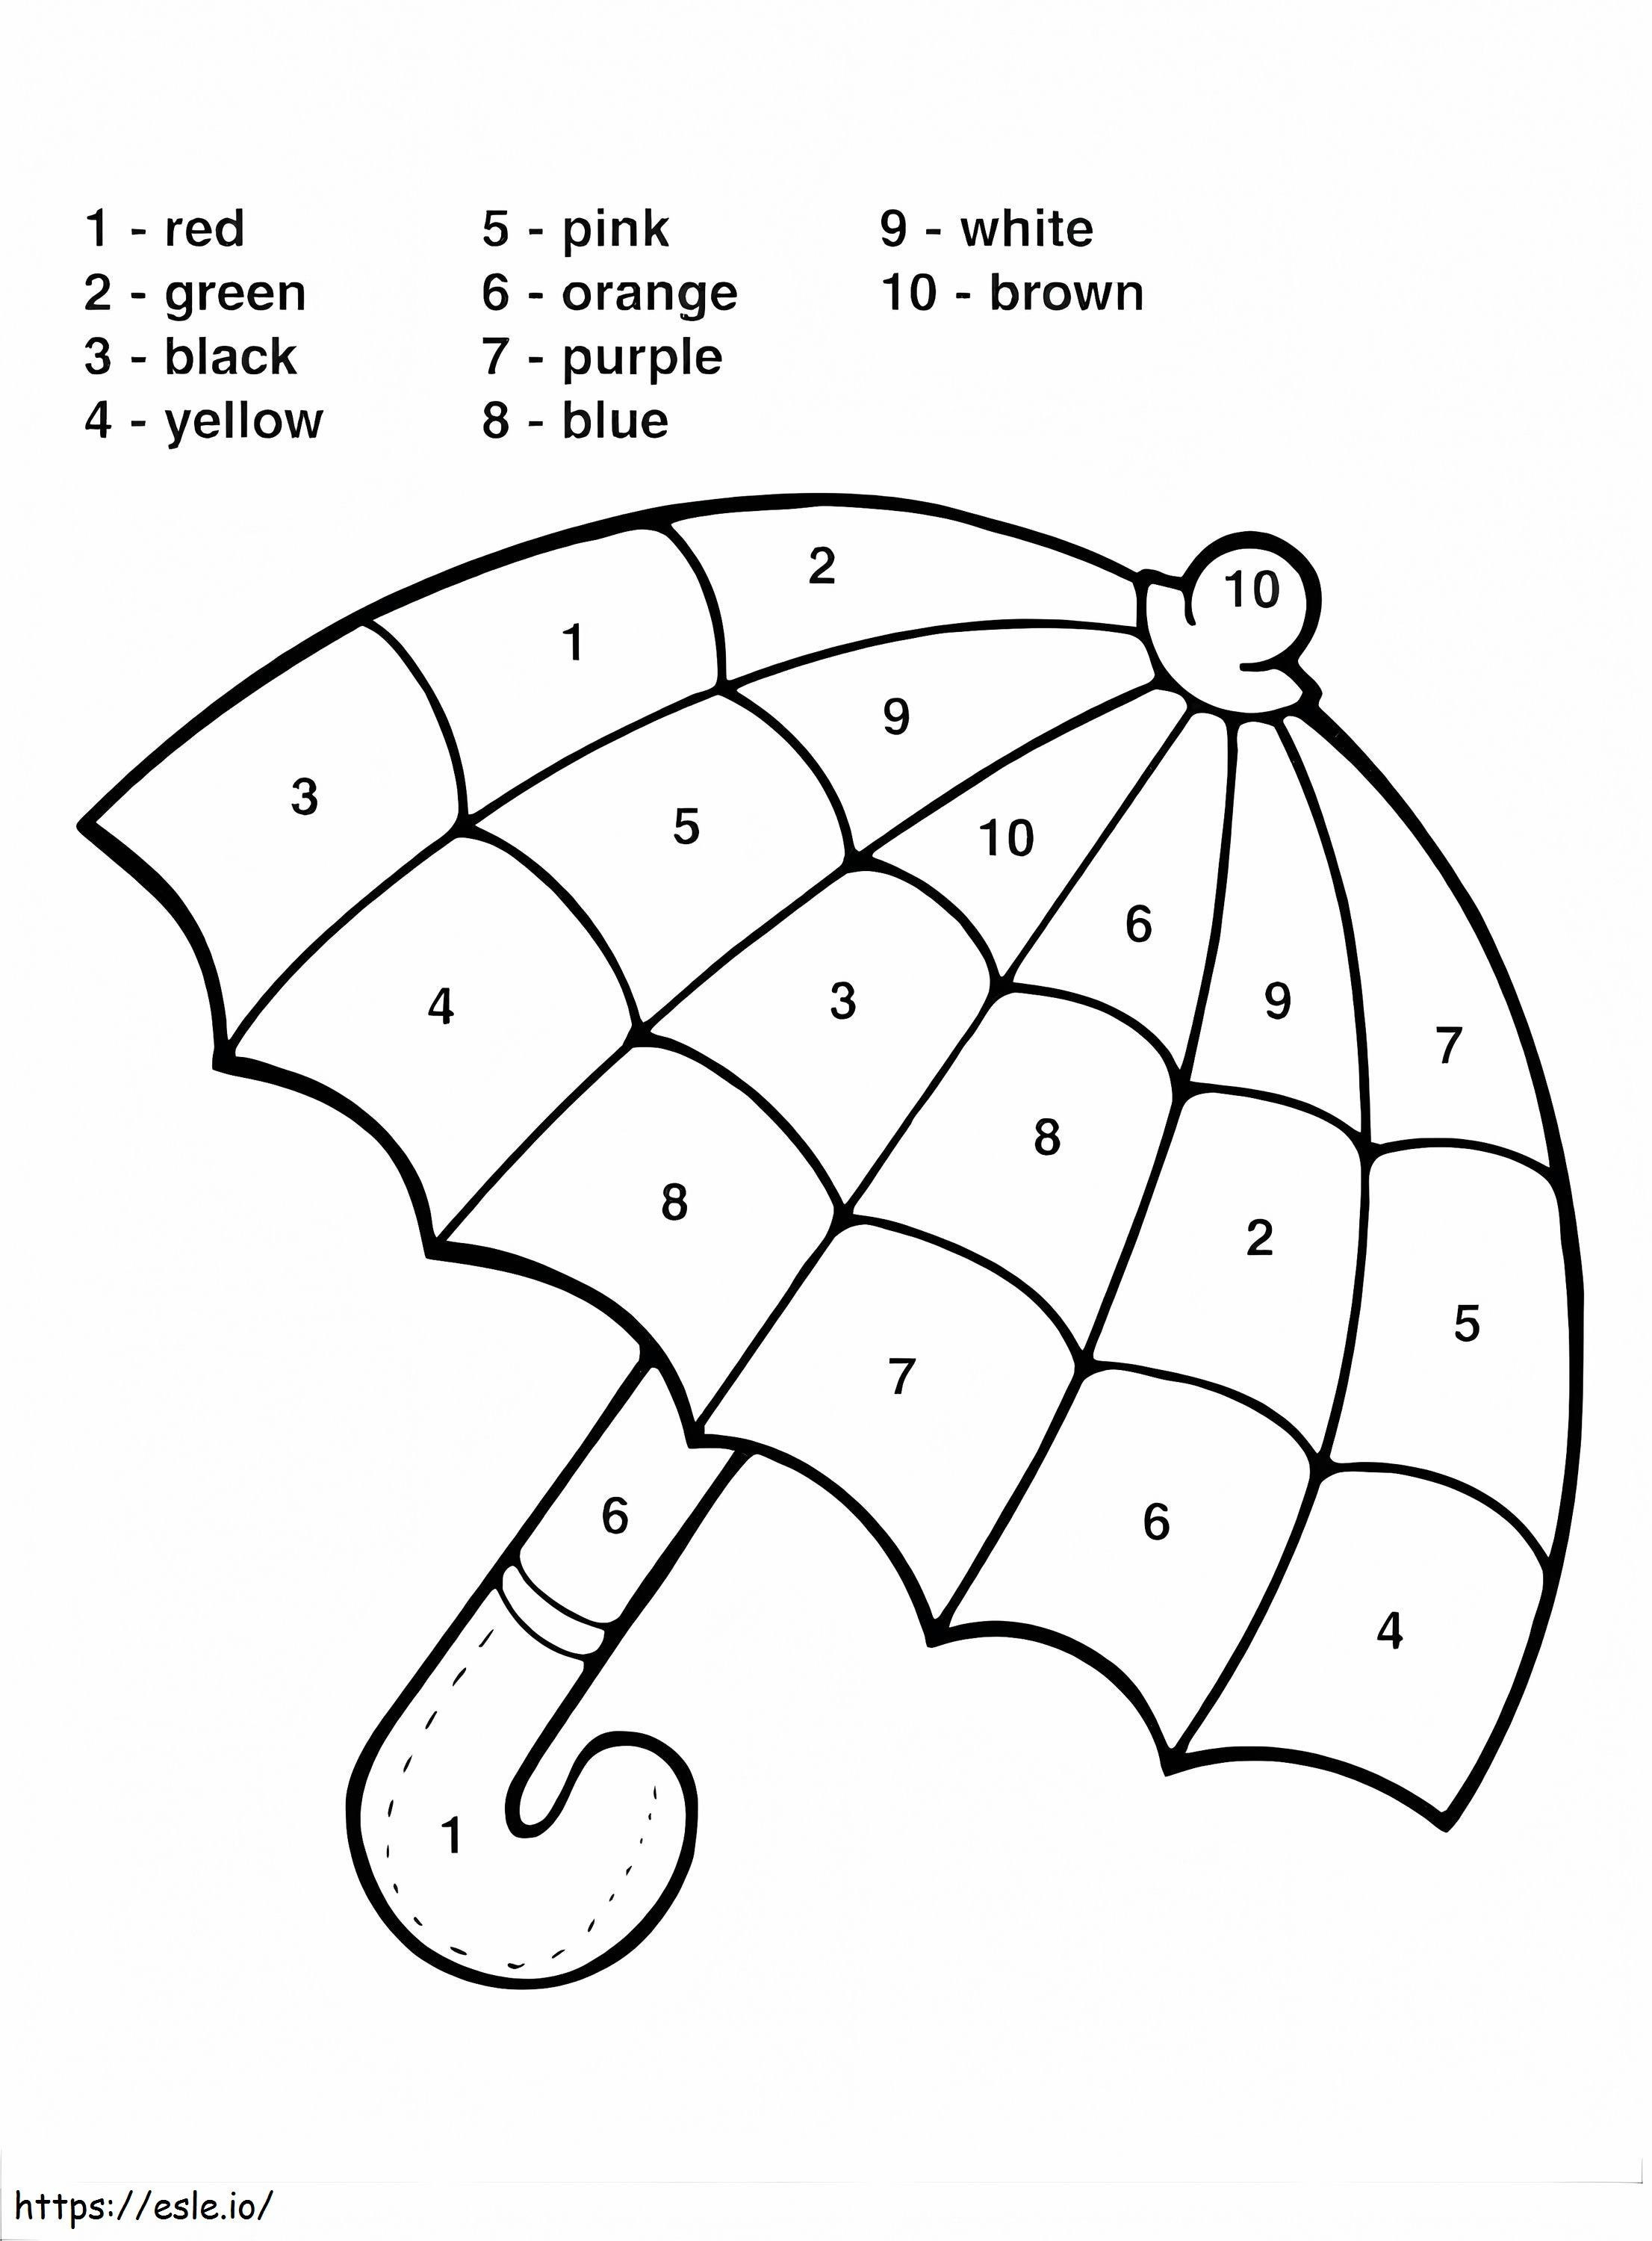 1573087398 Planilhas para colorir por números Planilhas de matemática para colorir por números para o jardim de infância Planilhas para colorir por números Números de cores Planilhas para colorir de matemática da 3ª série para o jardim de infância para colorir